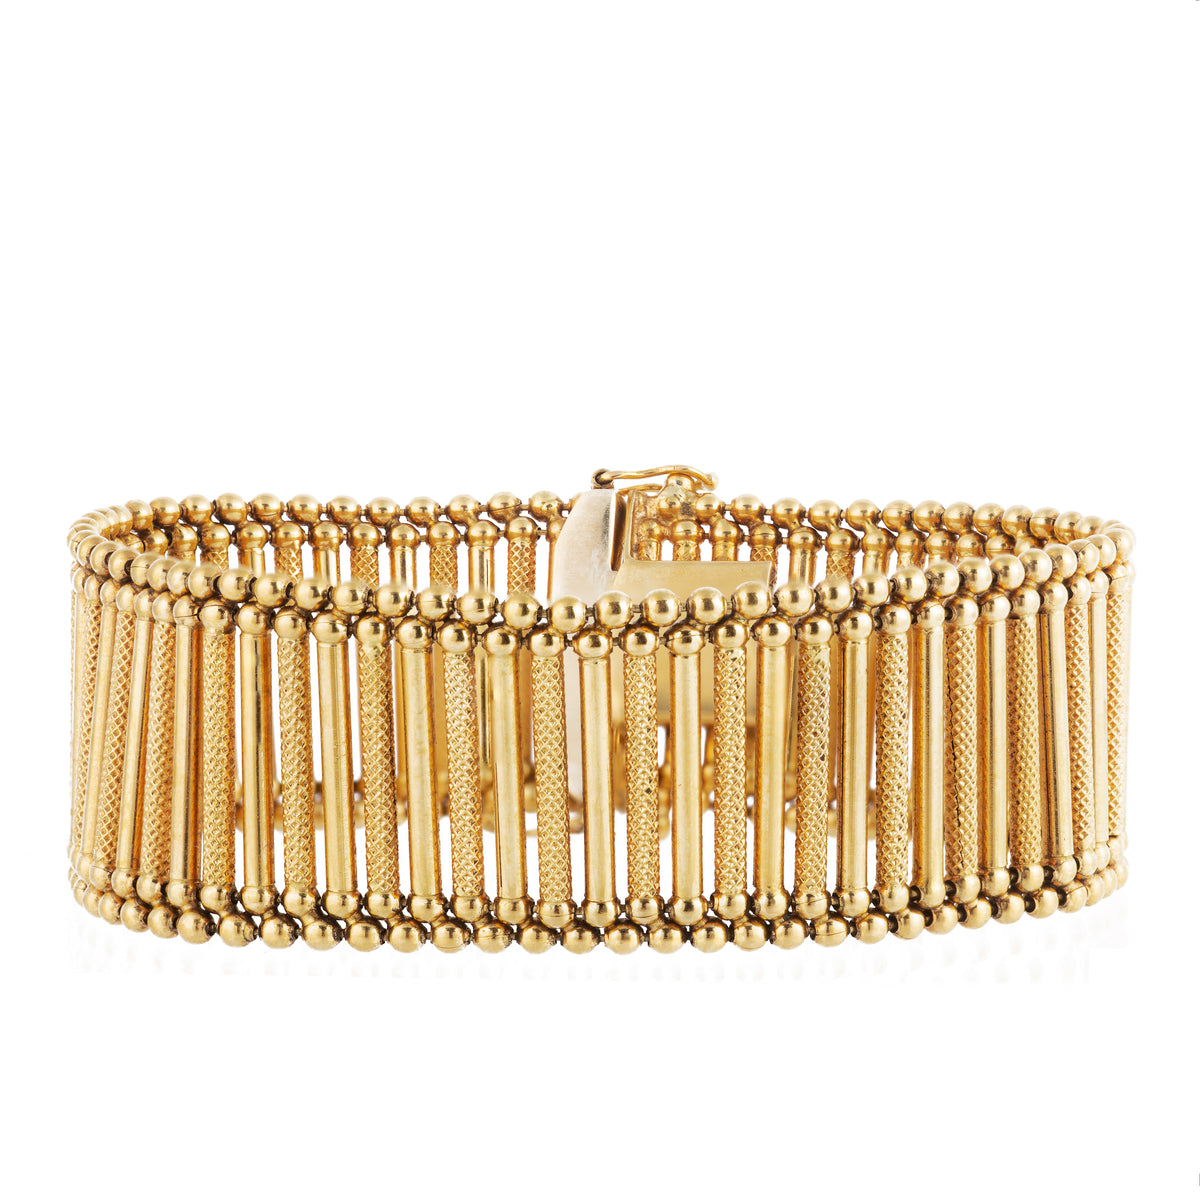 Eighteen Carat Gold Italian Bracelet